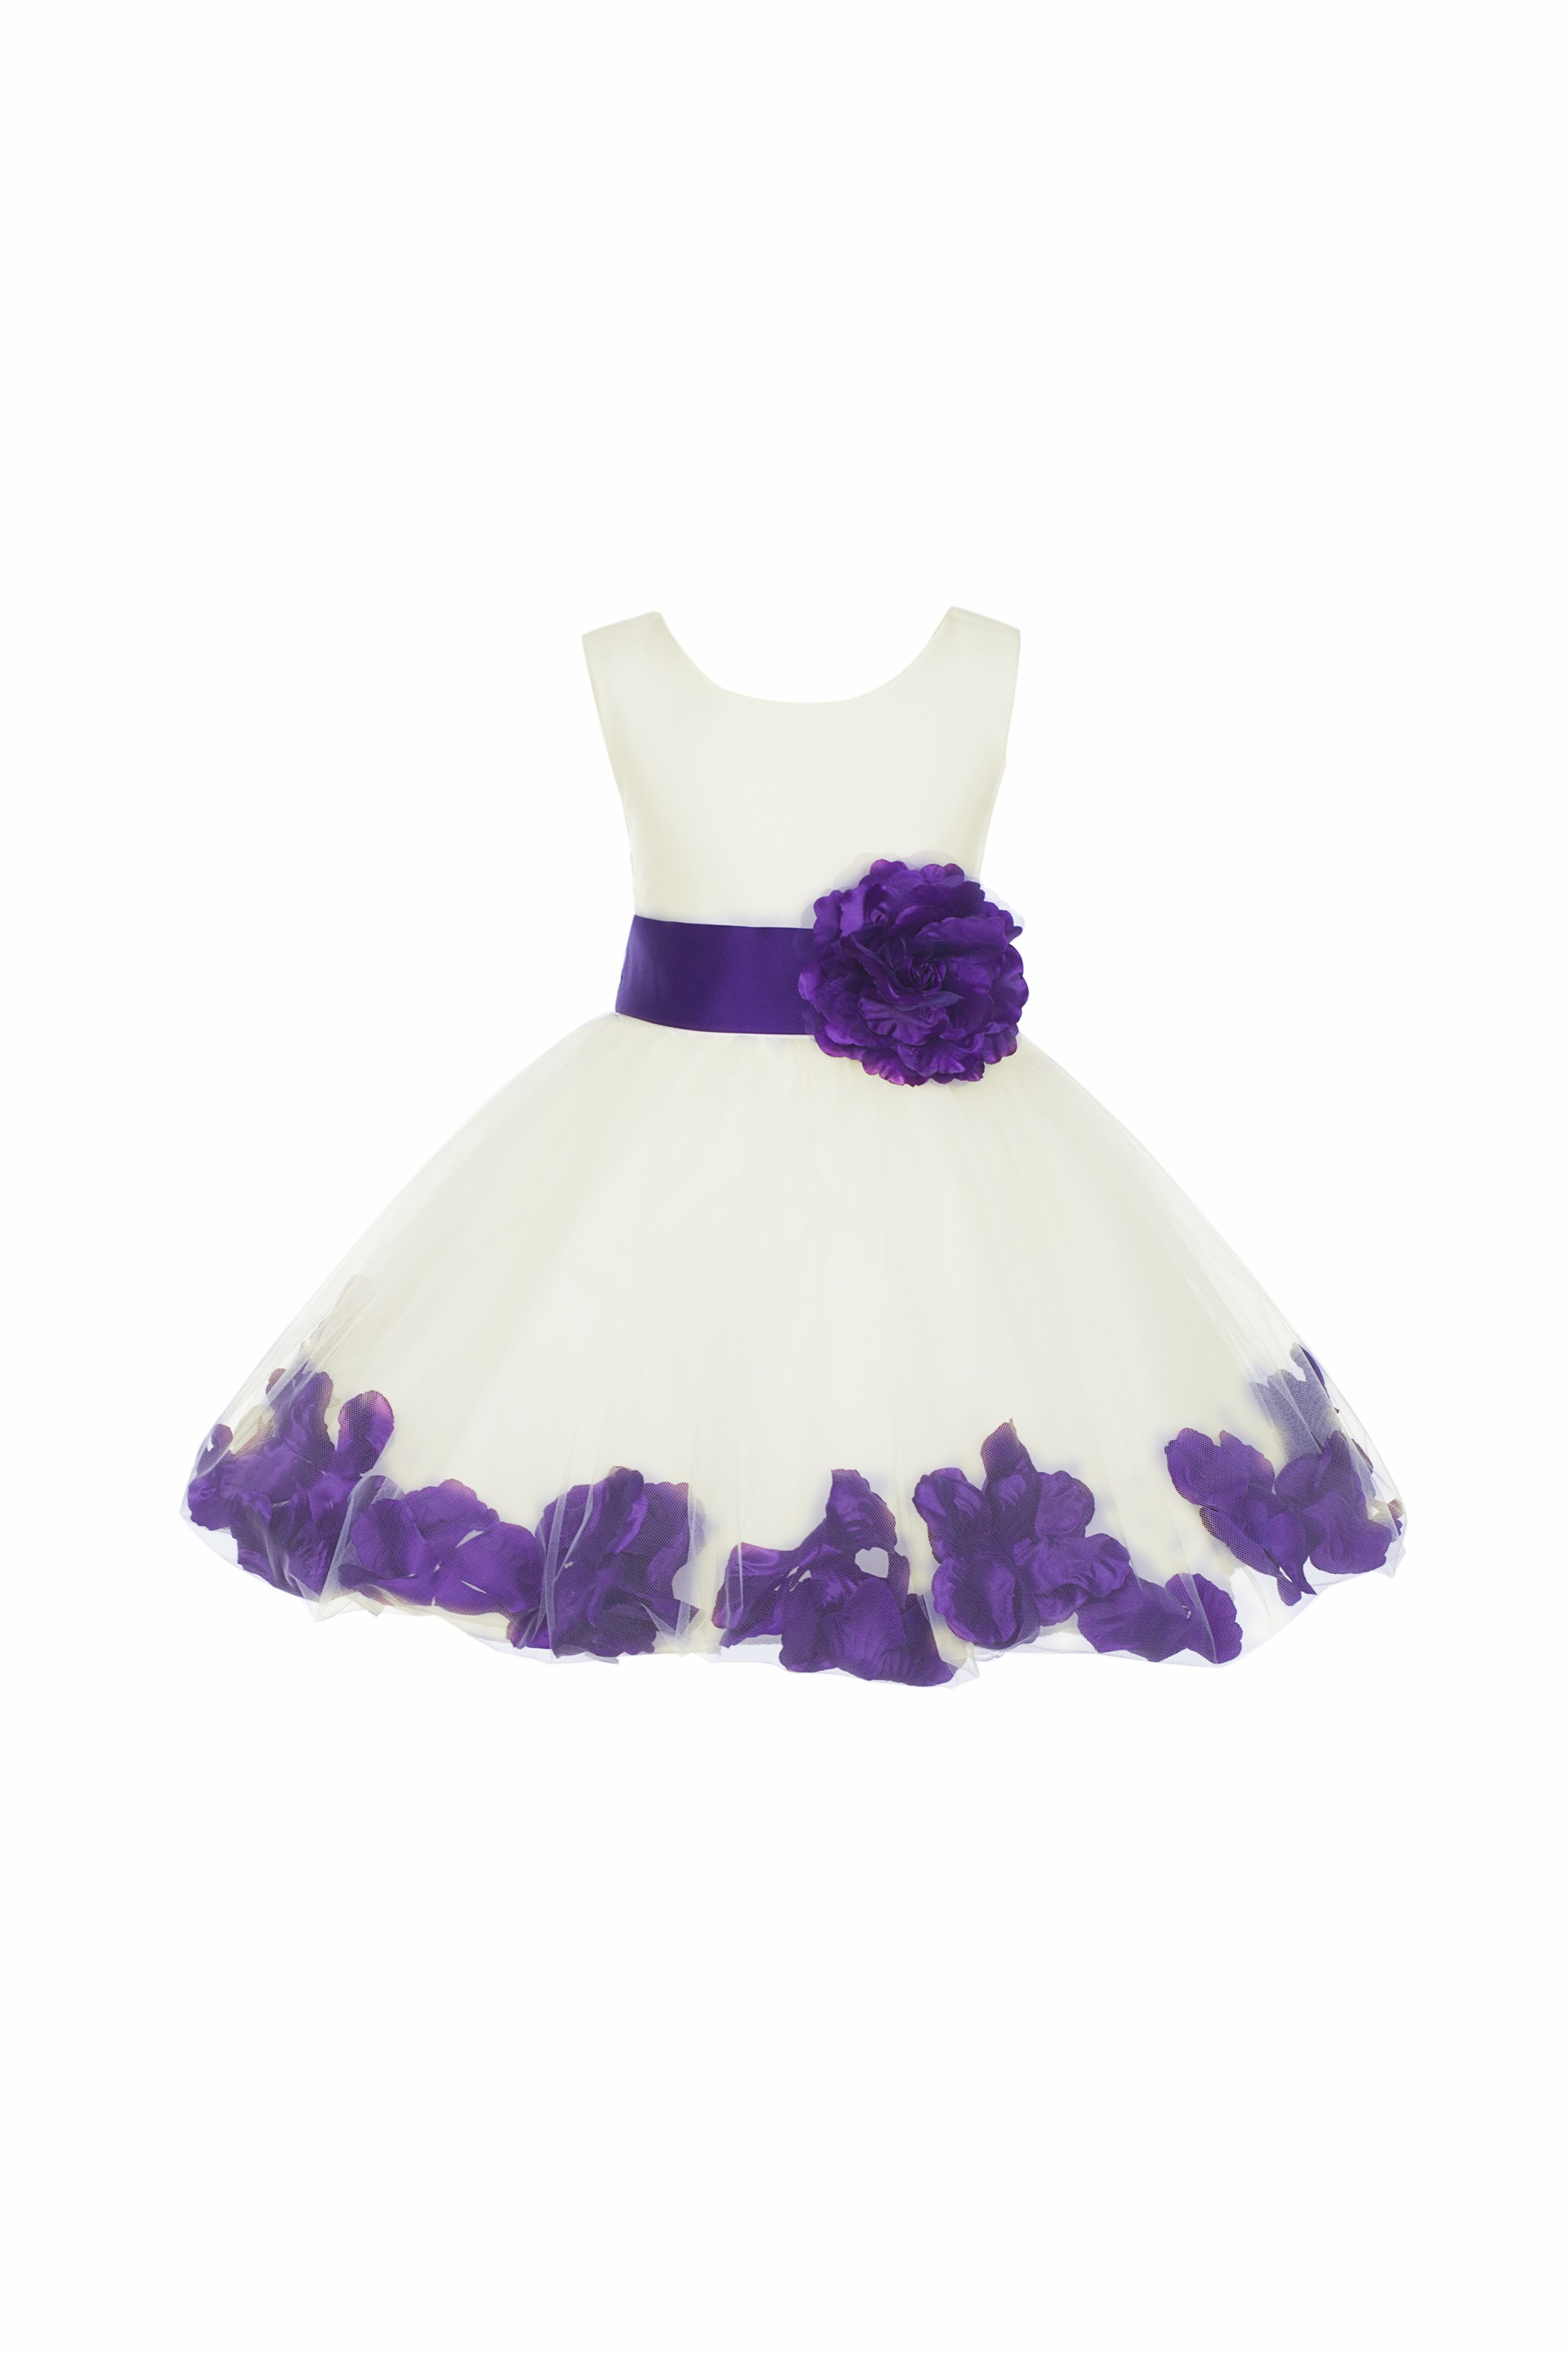 Ivory/Cadbury Tulle Rose Petals Knee Length Flower Girl Dress 306S